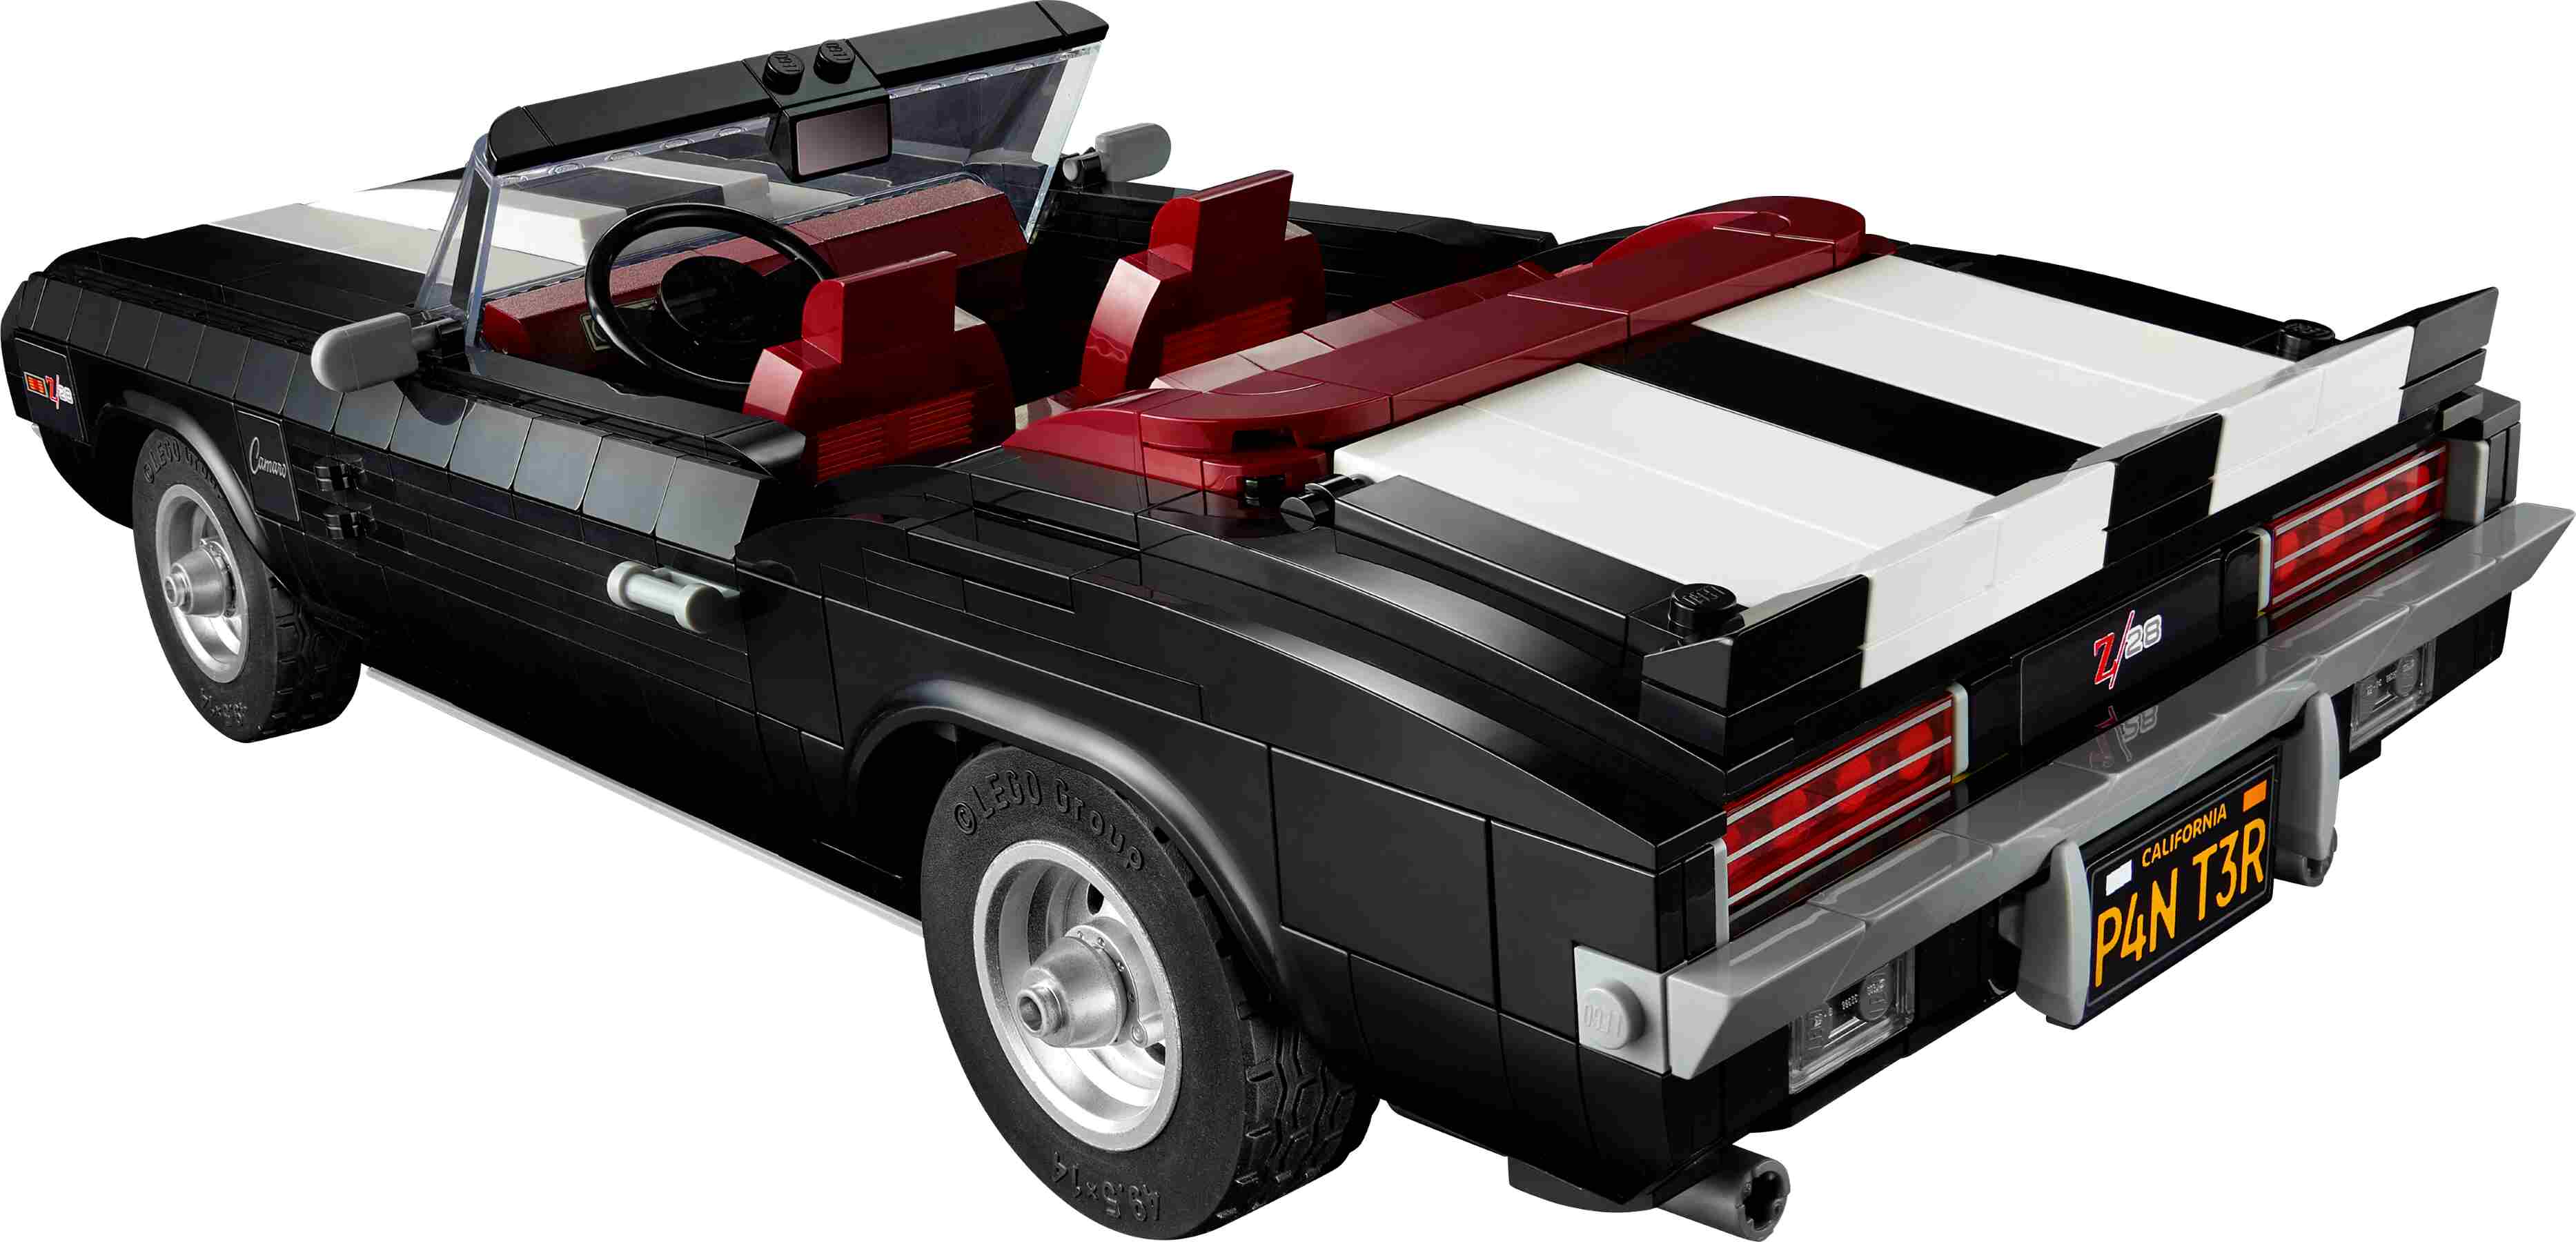 LEGO 10304 Icons Chevrolet Camaro Z28, Modellauto Sammlerstück Retro-Accessoires